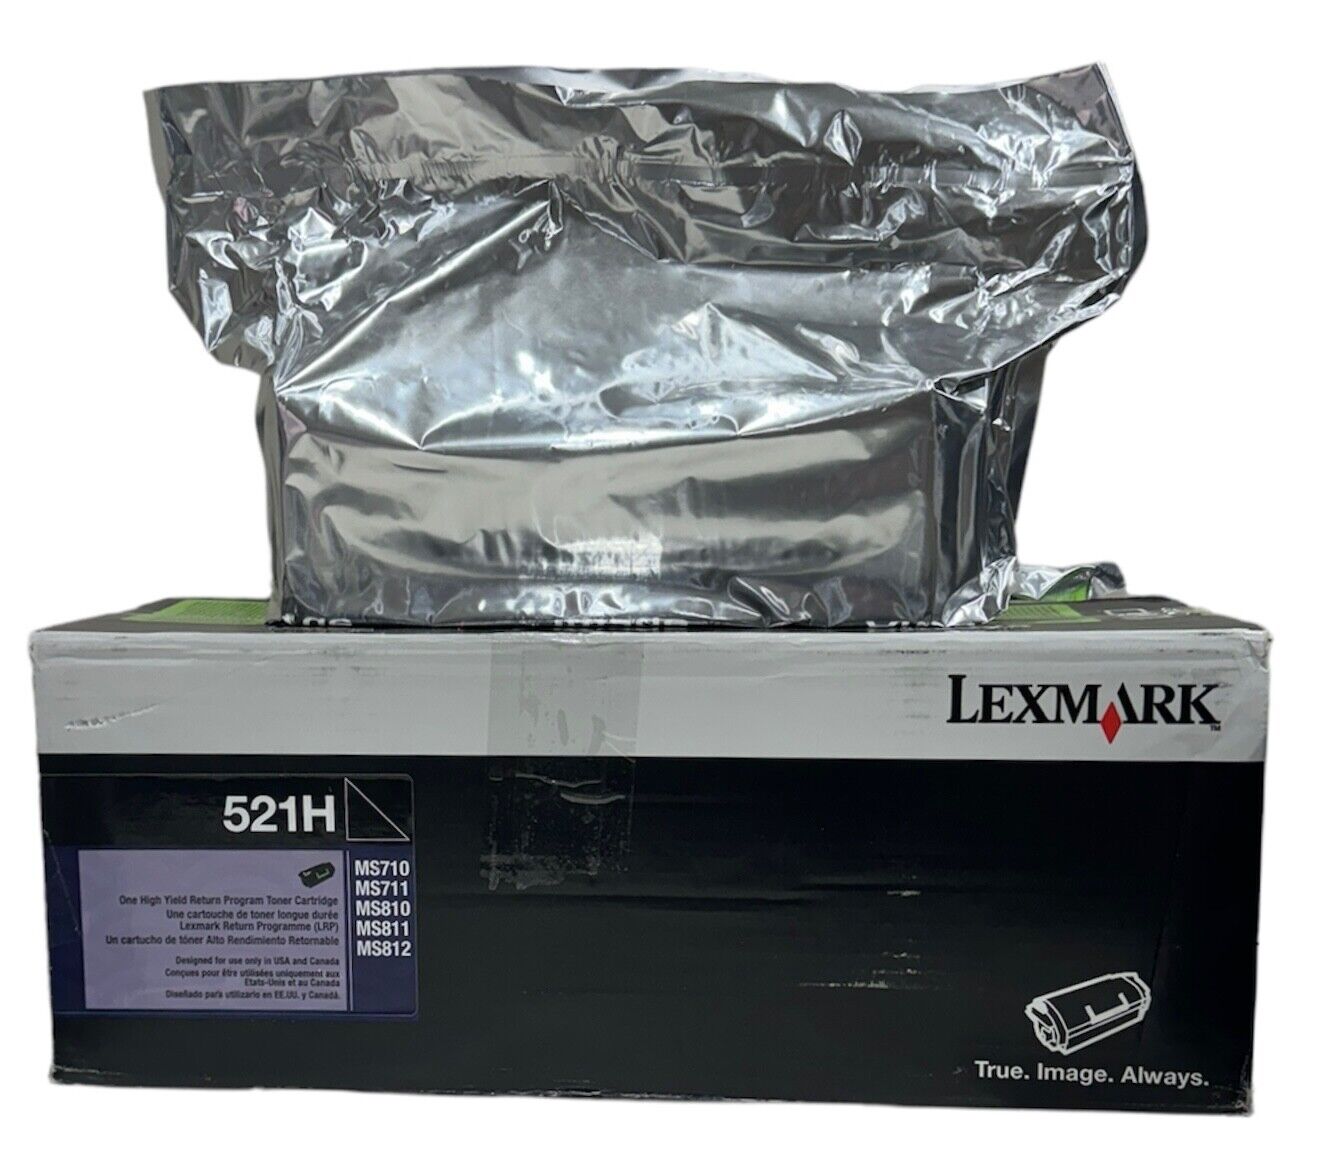 Genuine Lexmark 521H High Yield Toner Cartridge Black Sealed in Open Box